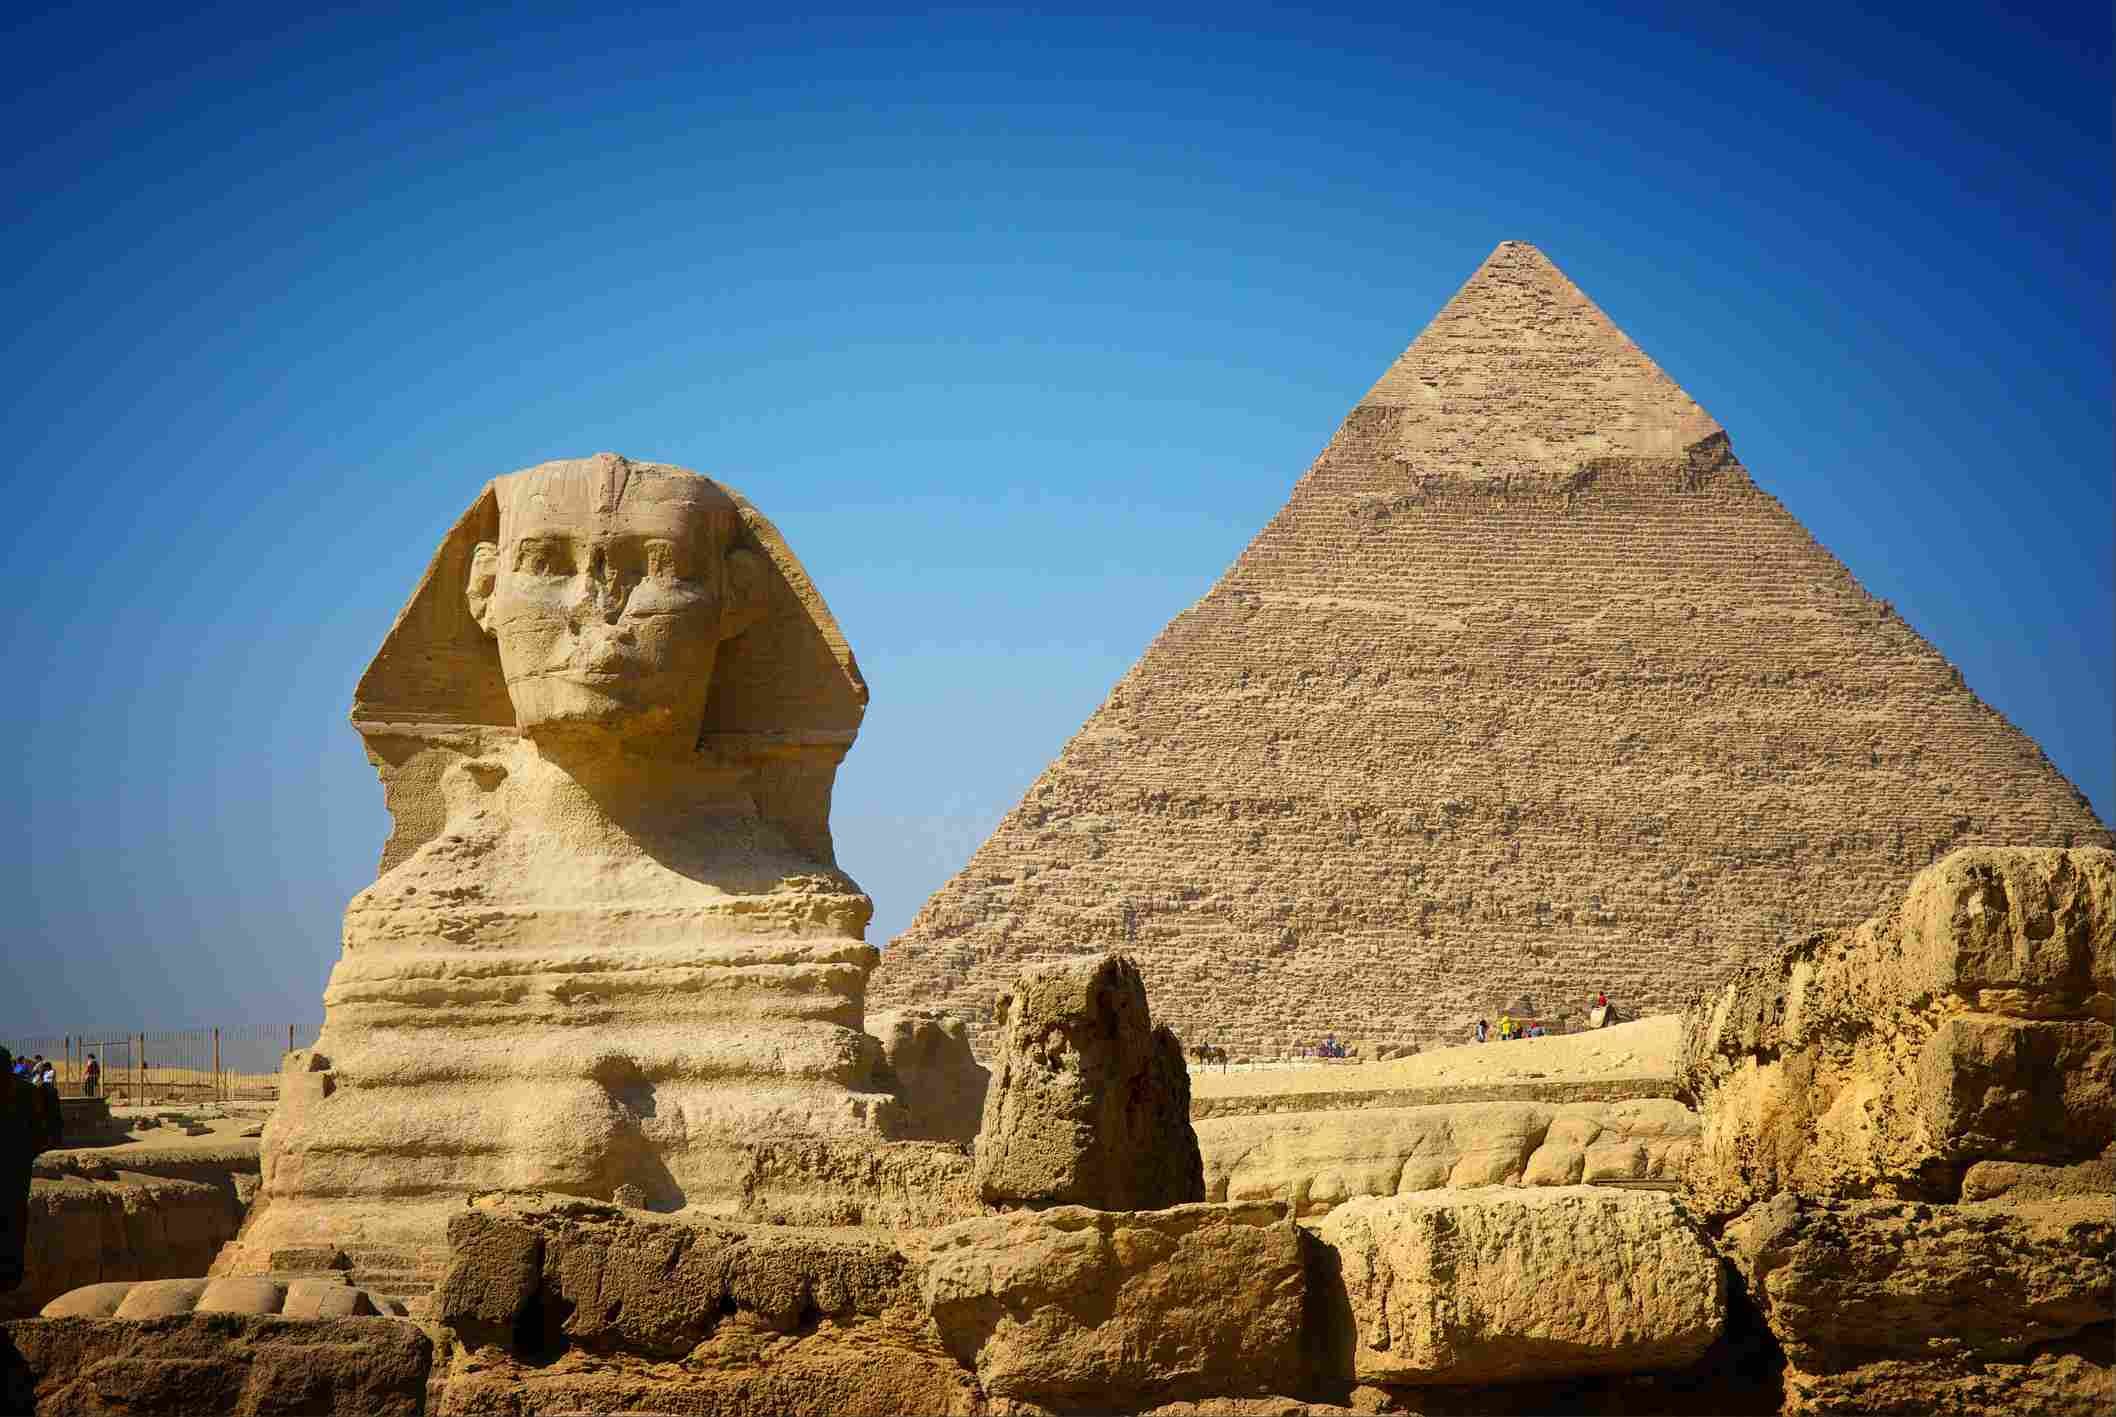 Древности пирамид. Сфинкс Гизы. Пирамиды Гизы и сфинкс. Пирамиды Луксор Египет. Пирамида Хефрена древний Египет.